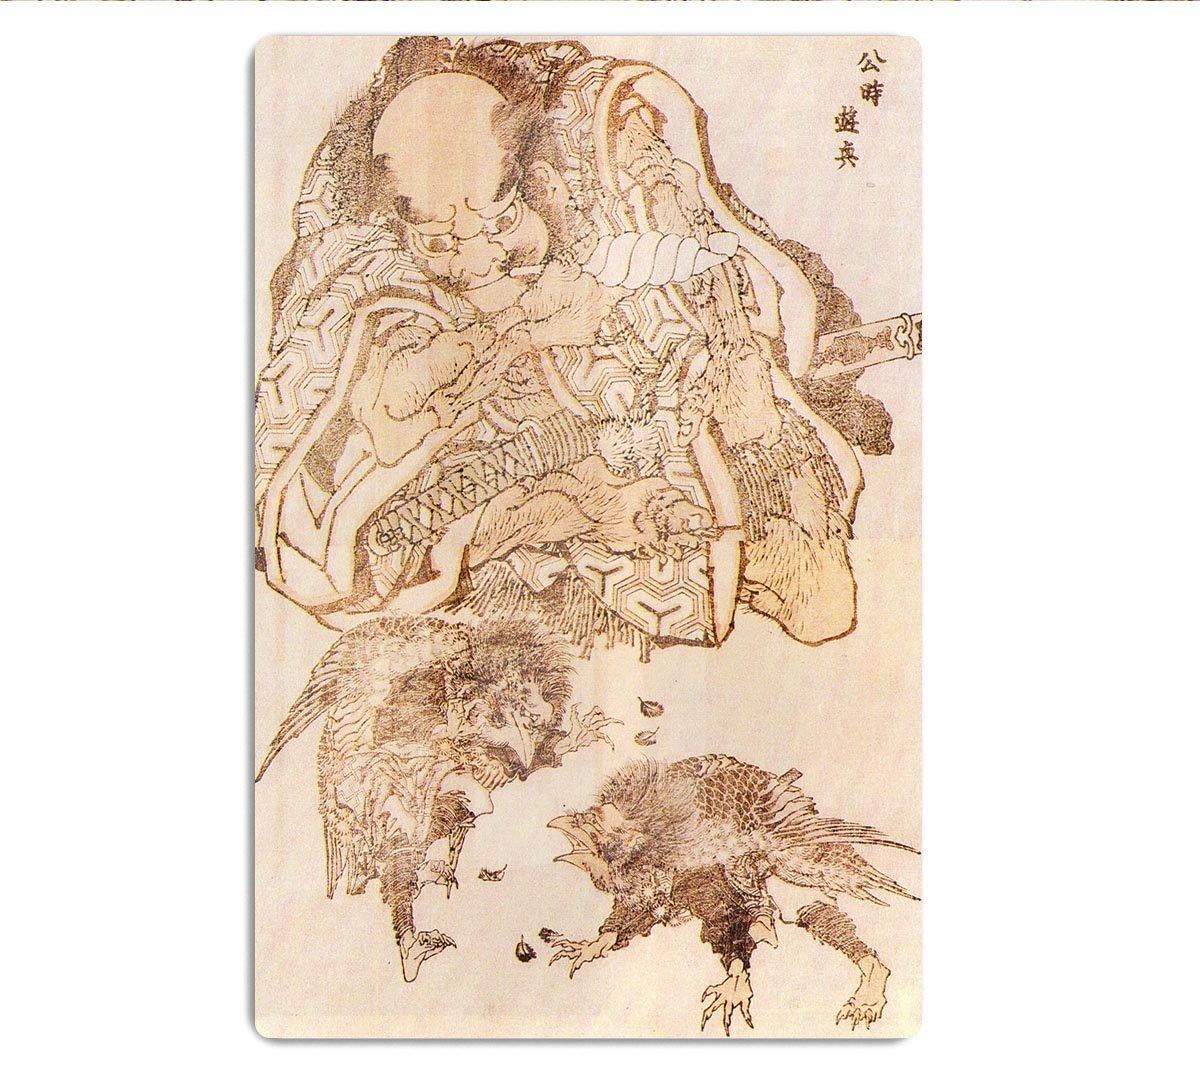 Exodus by Hokusai HD Metal Print